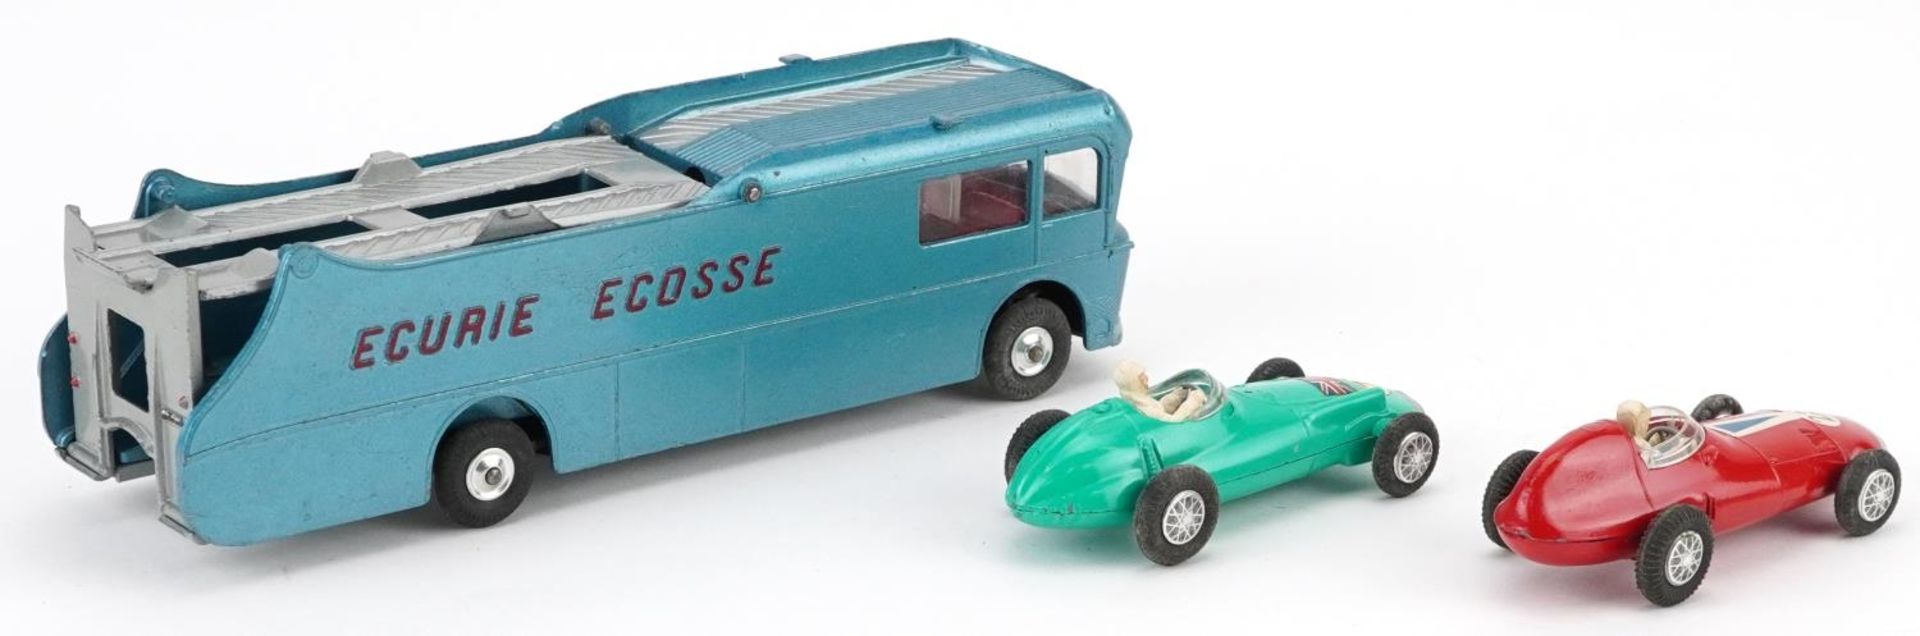 Vintage Corgi Major diecast Ecurie Ecosse racing car transporter with racing cars, gift set no 16 - Image 3 of 6